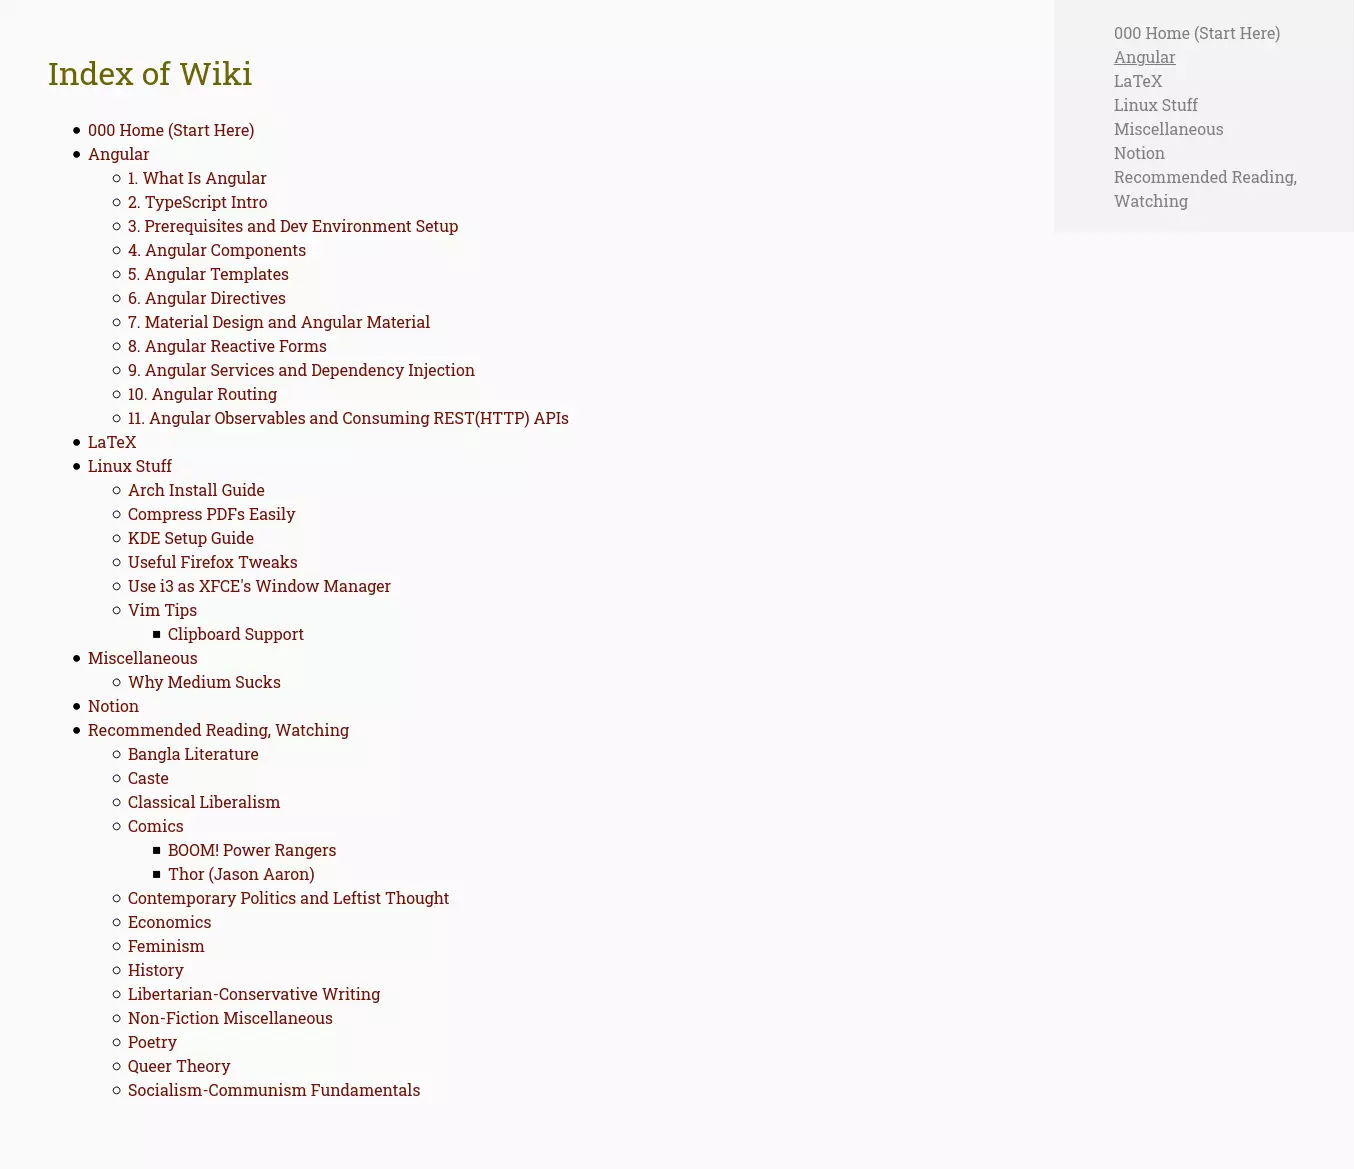 Screenshot of my wiki index.